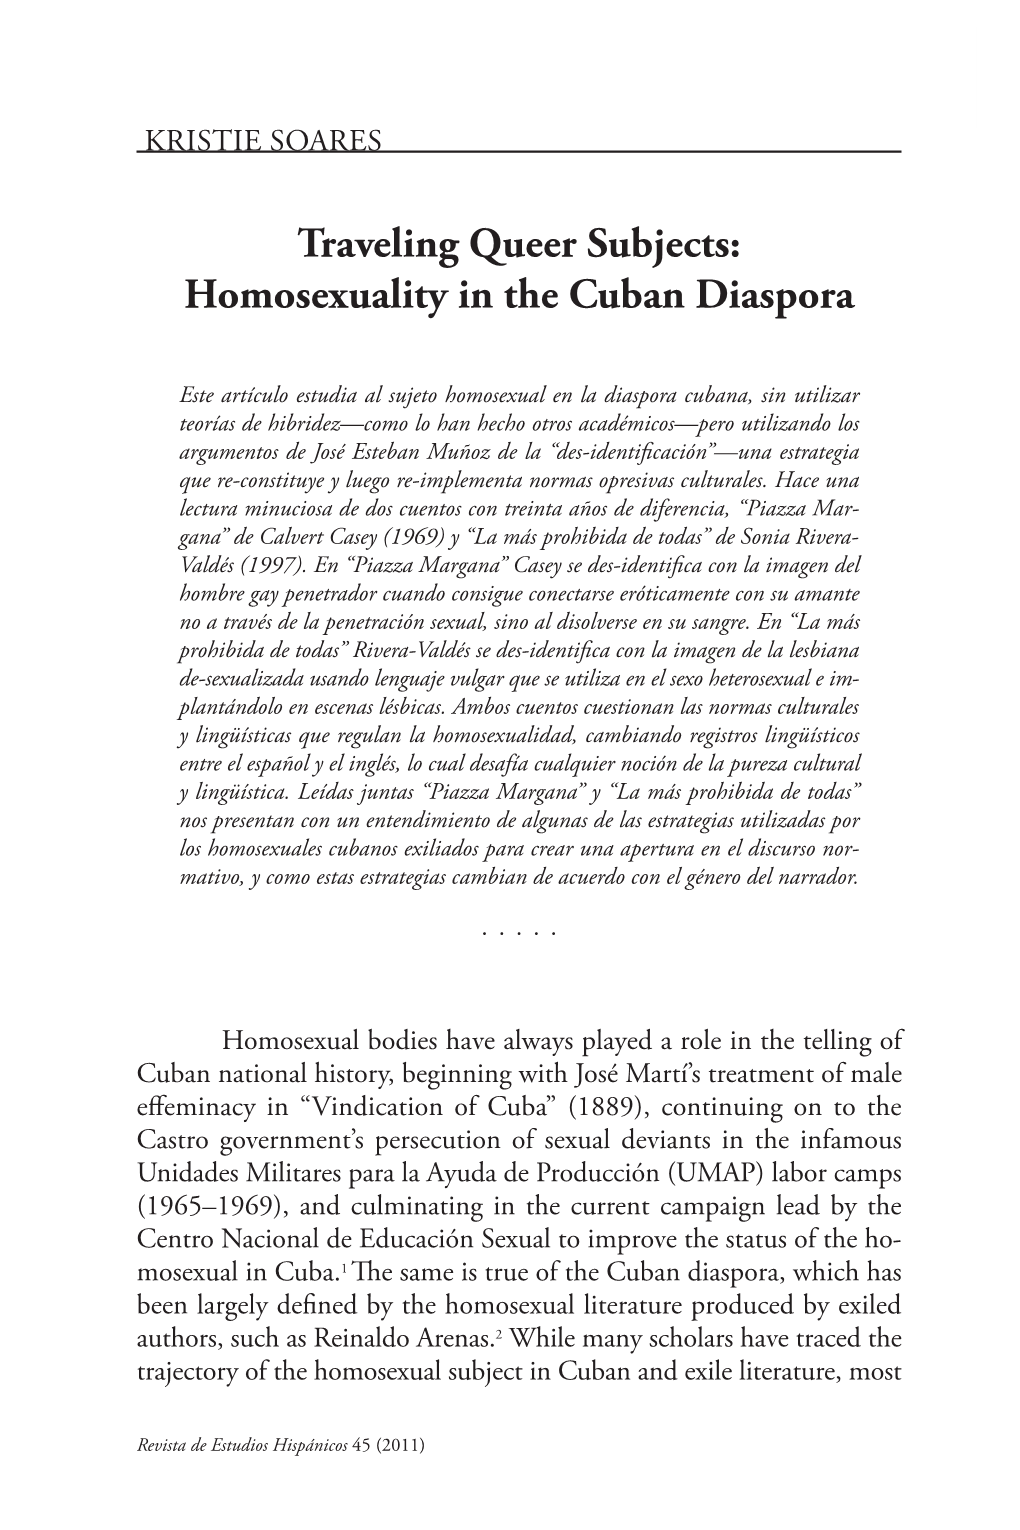 Homosexuality in the Cuban Diaspora